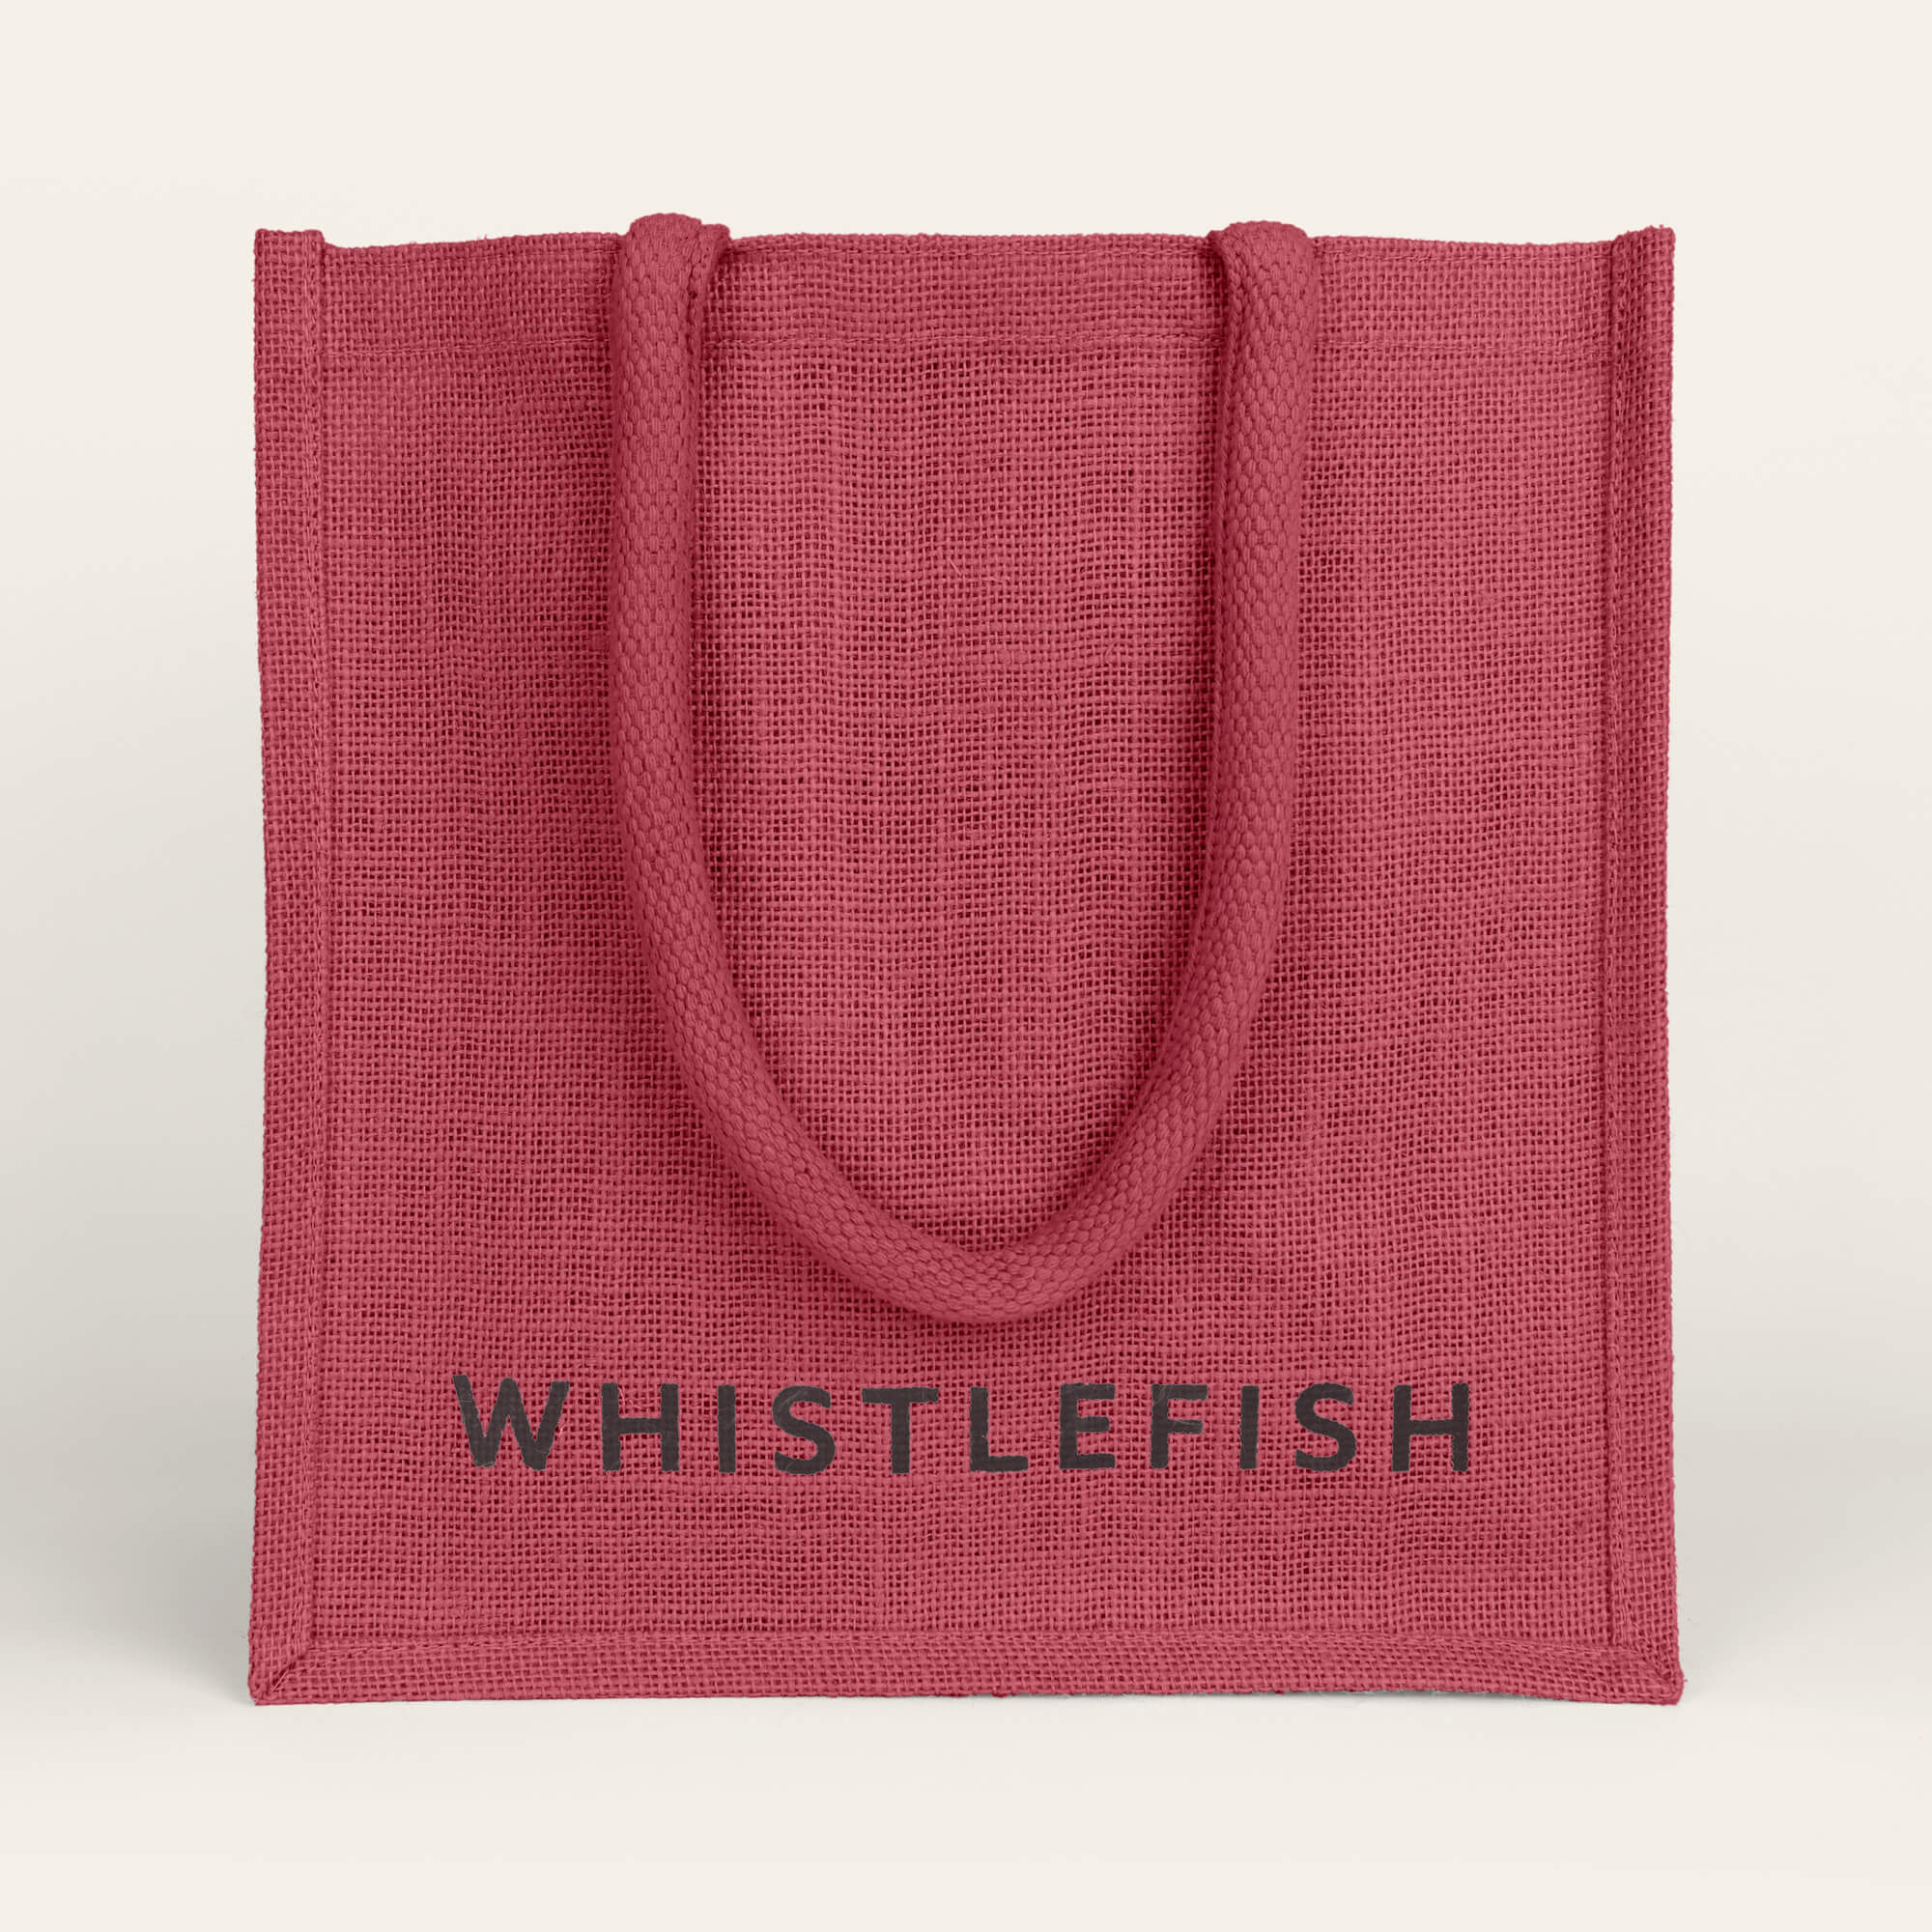 An image of Whistlefish Jute Bag Pink